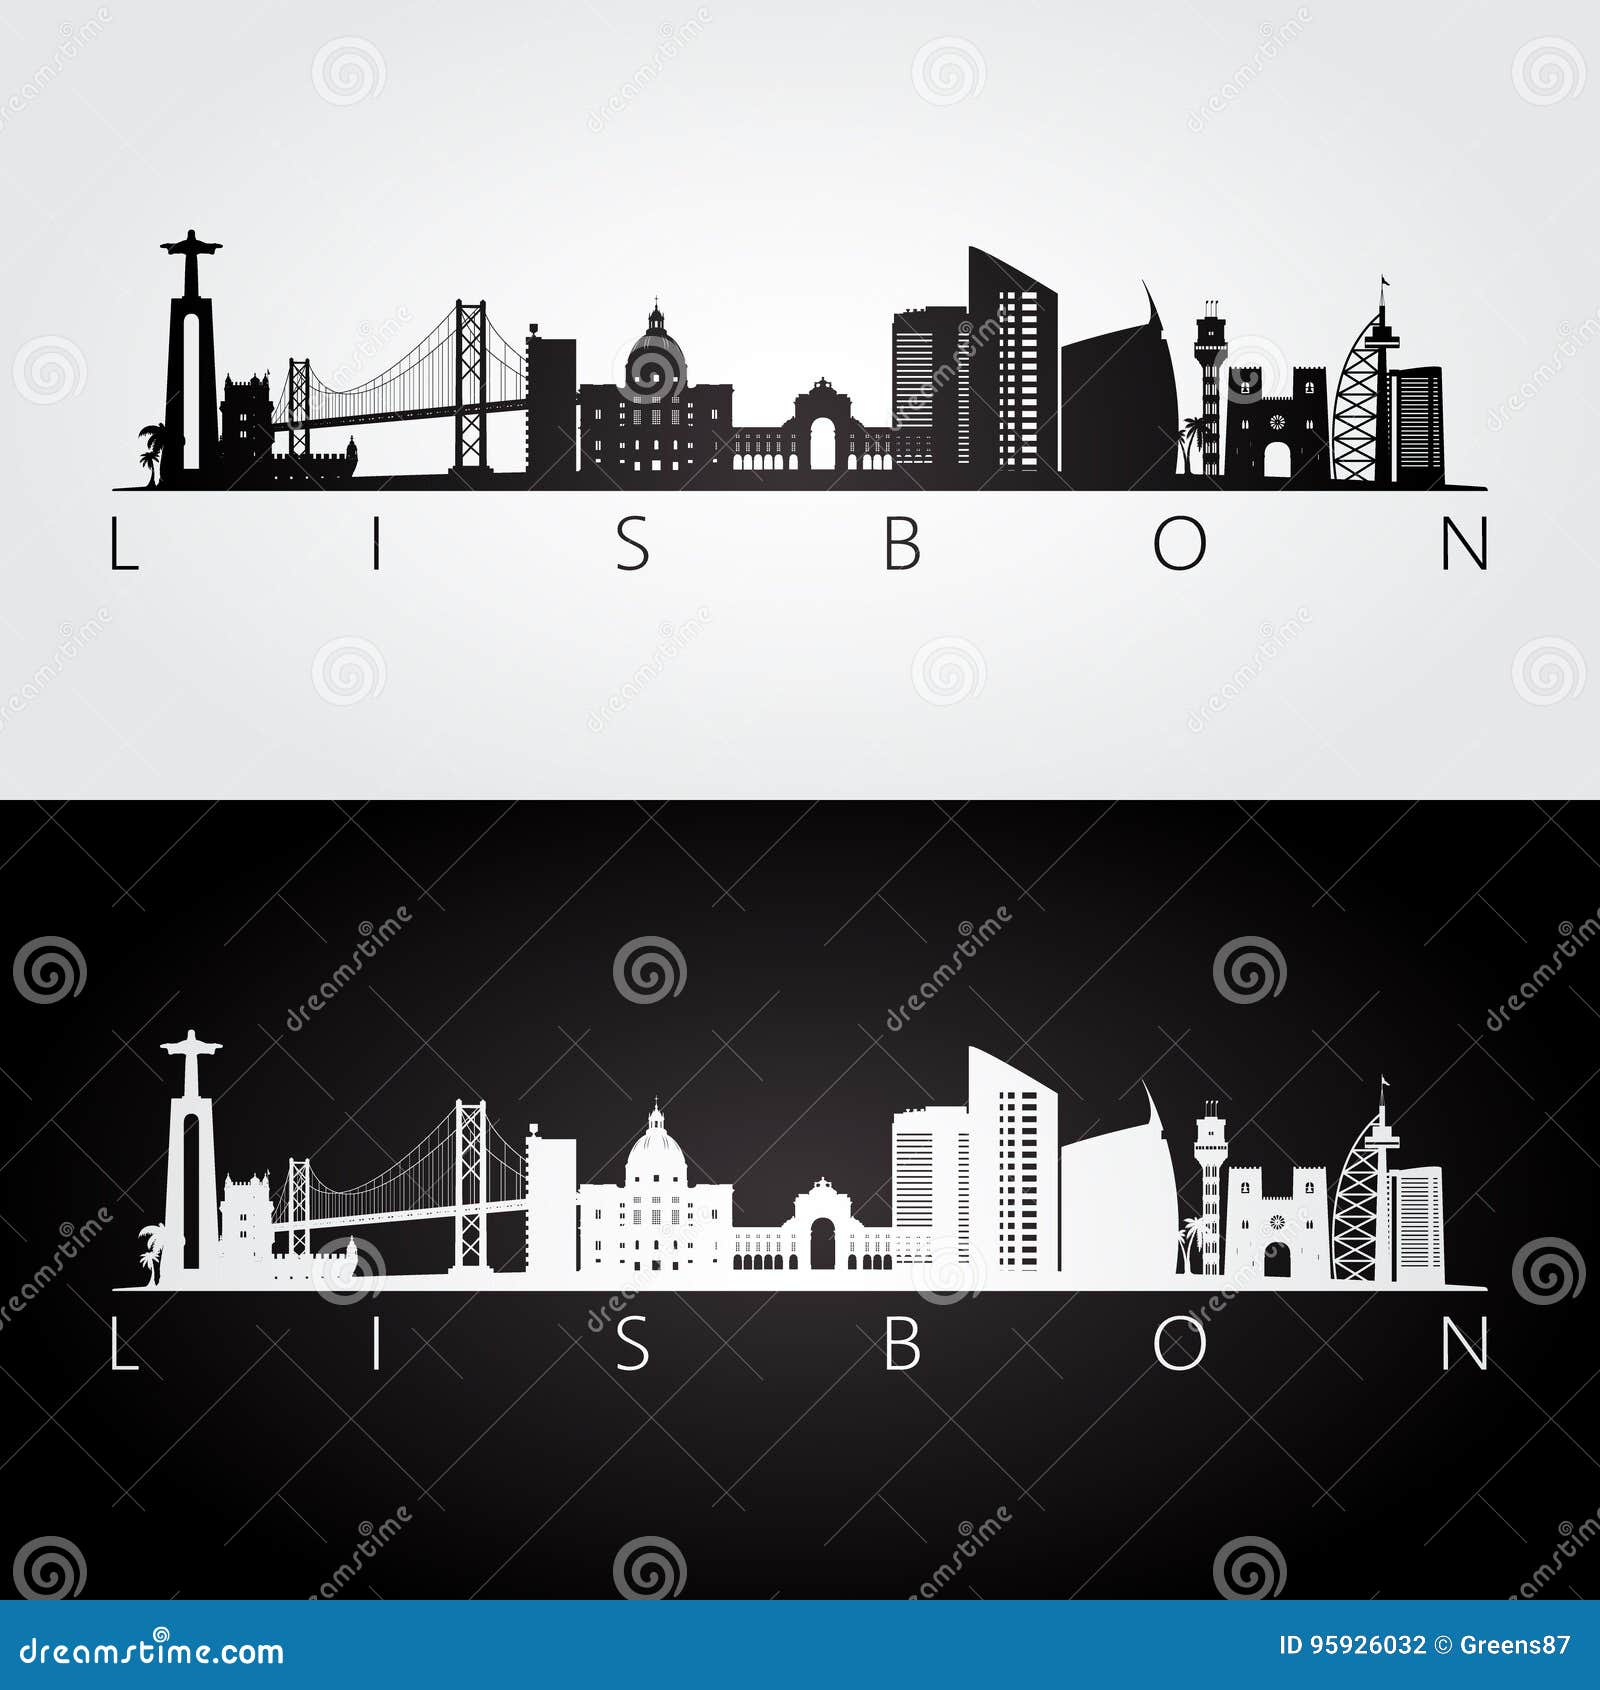 lisbon skyline and landmarks silhouette